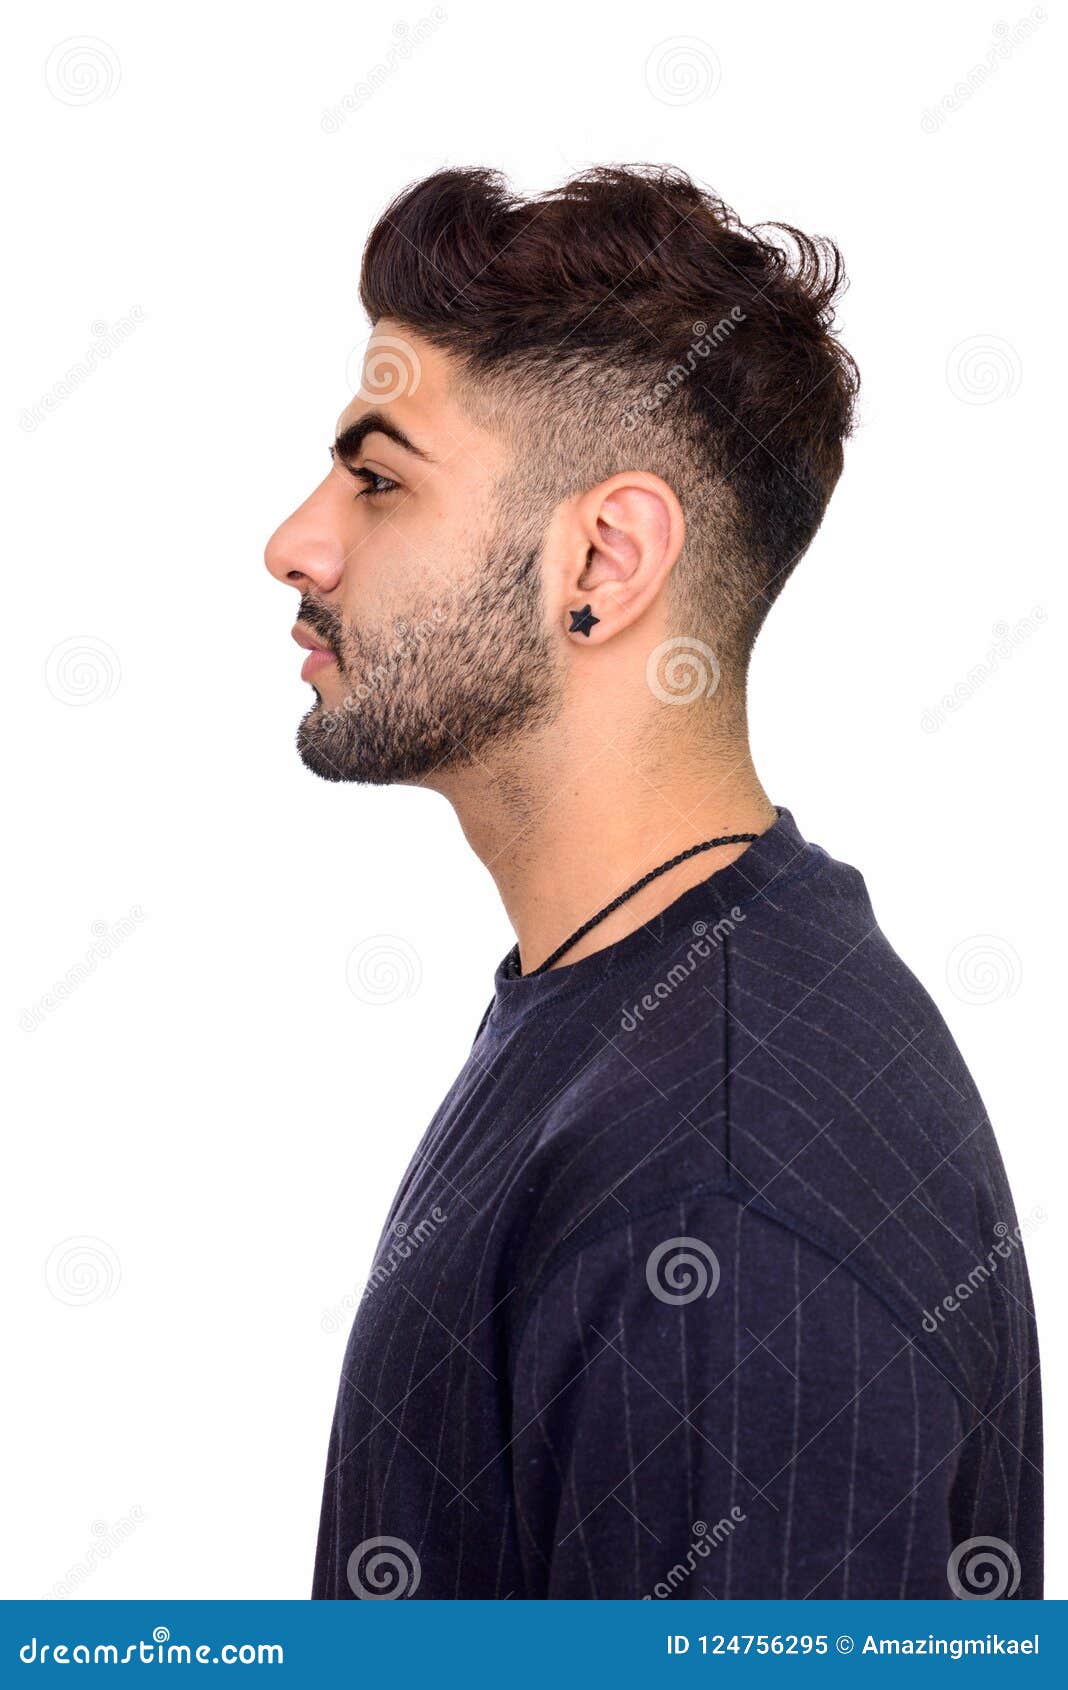 Virat Kohli - Pompadour hairstyle | Virat kohli hairstyle, Beard styles,  Hair images